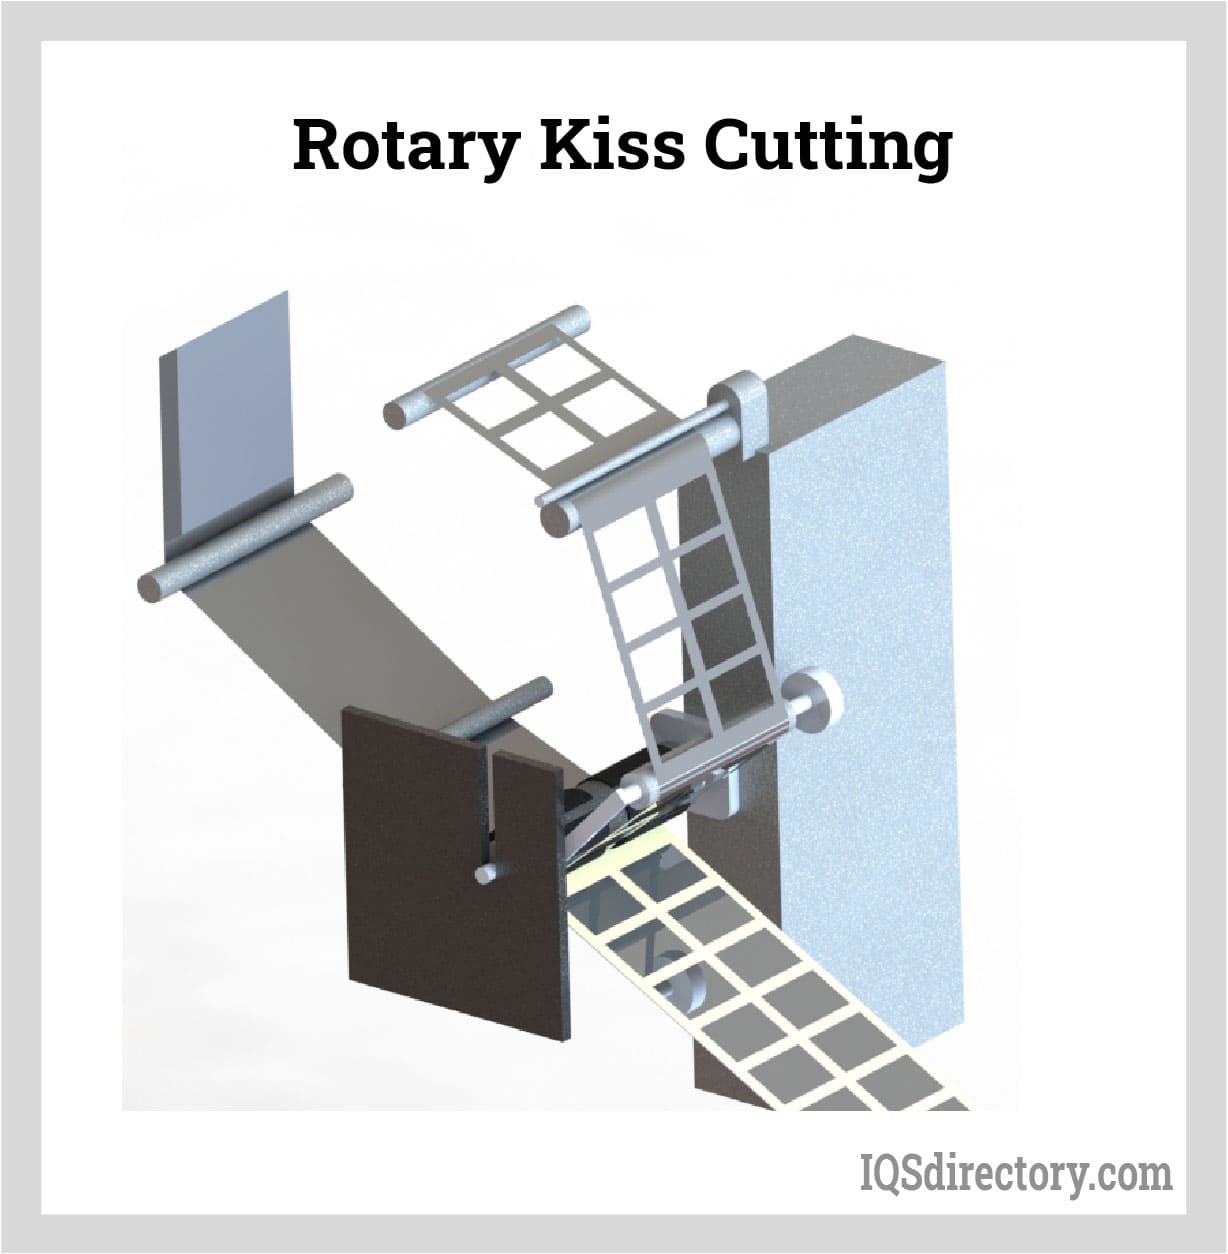 Rotary Kiss Cutting